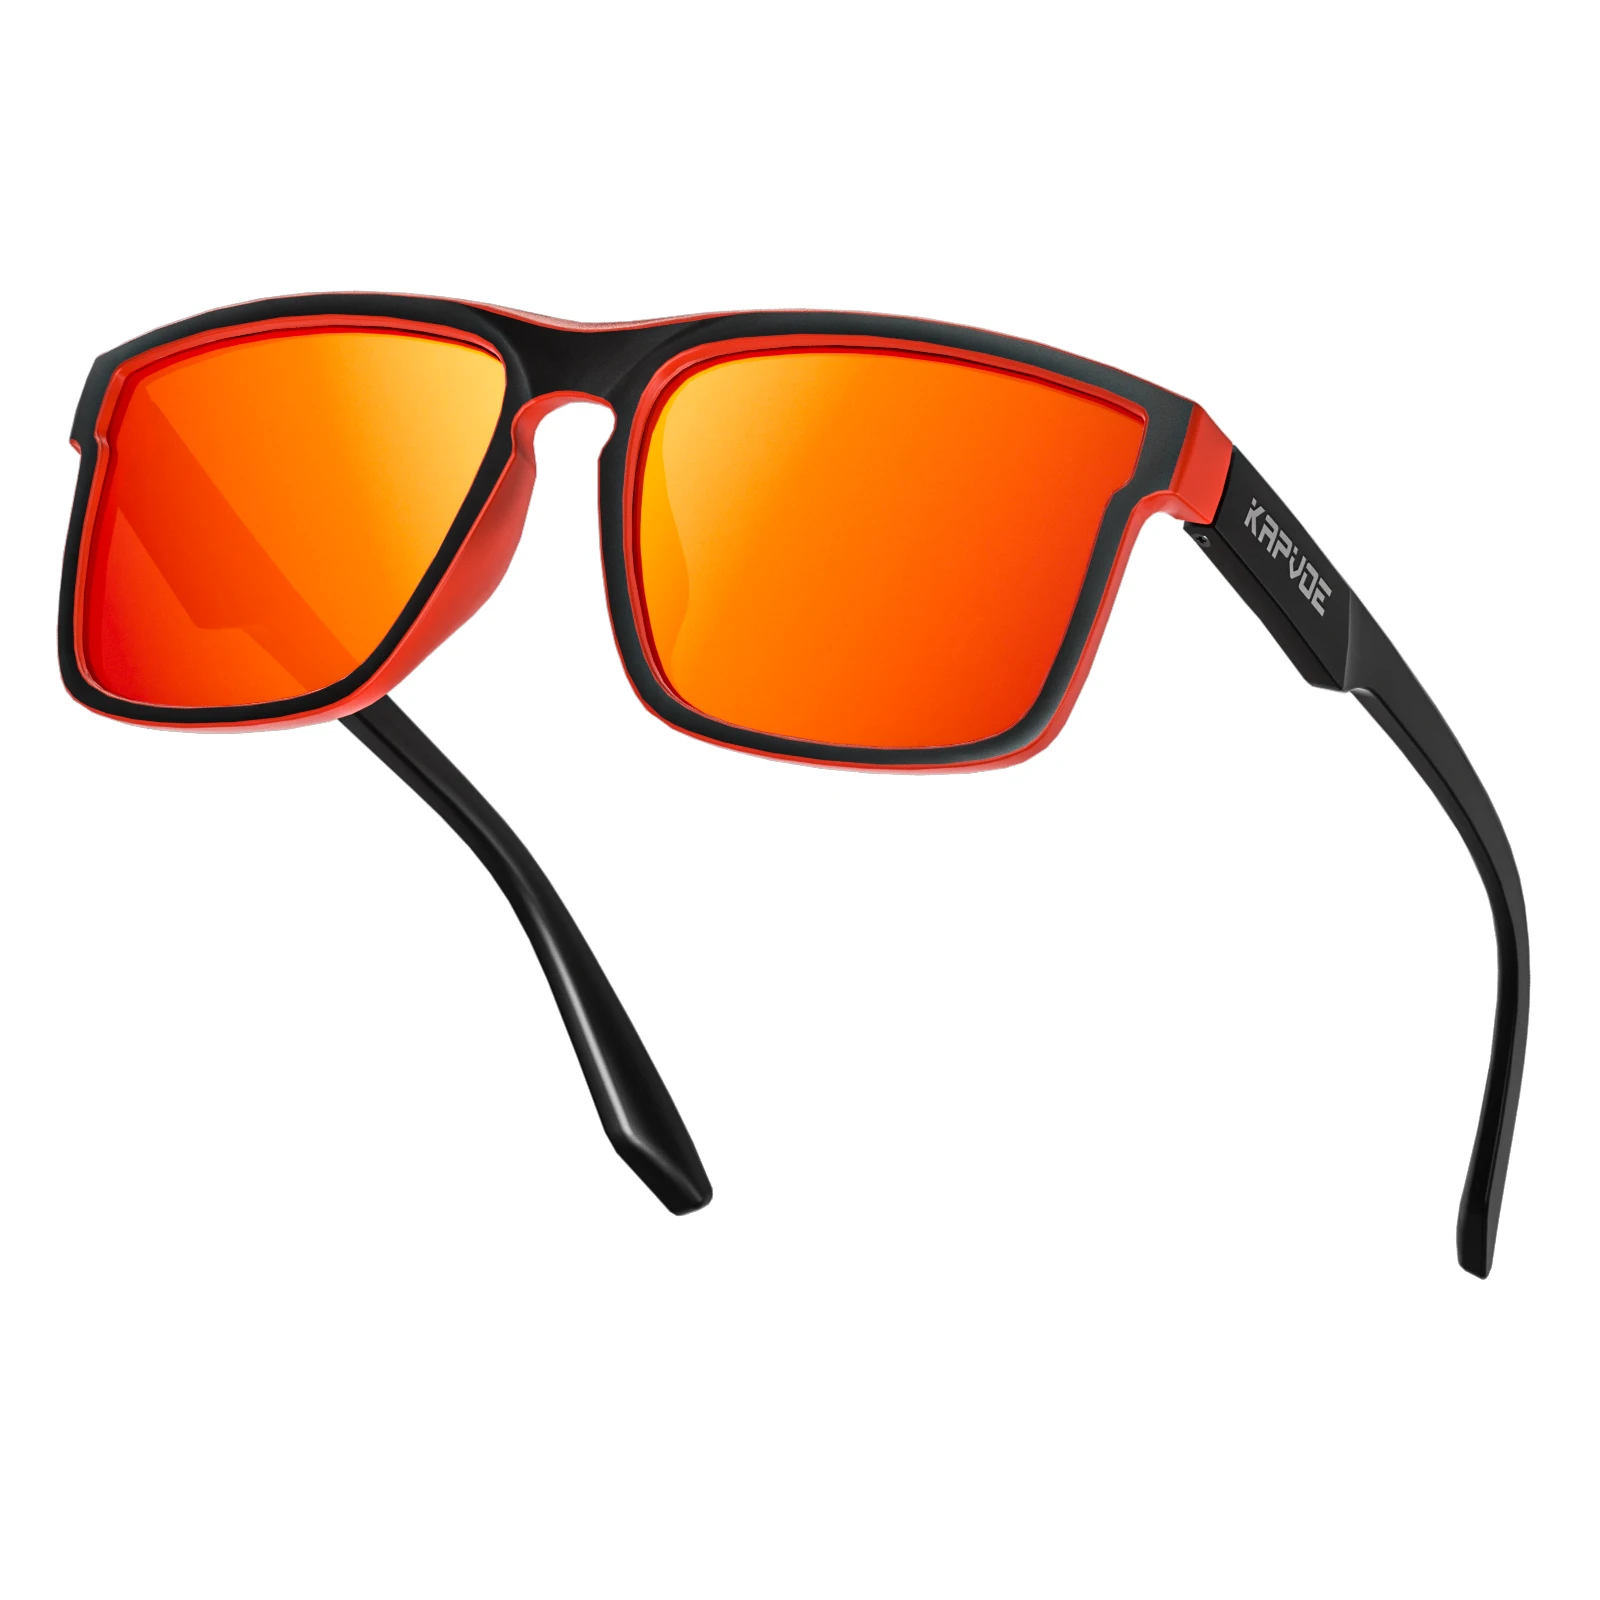 

Kapvoe New Outdoor Sports Fashion Polarized Sunglasses Fishing Eyewear for Men Women Cycling Glasses Driving Climbing Sunglasses